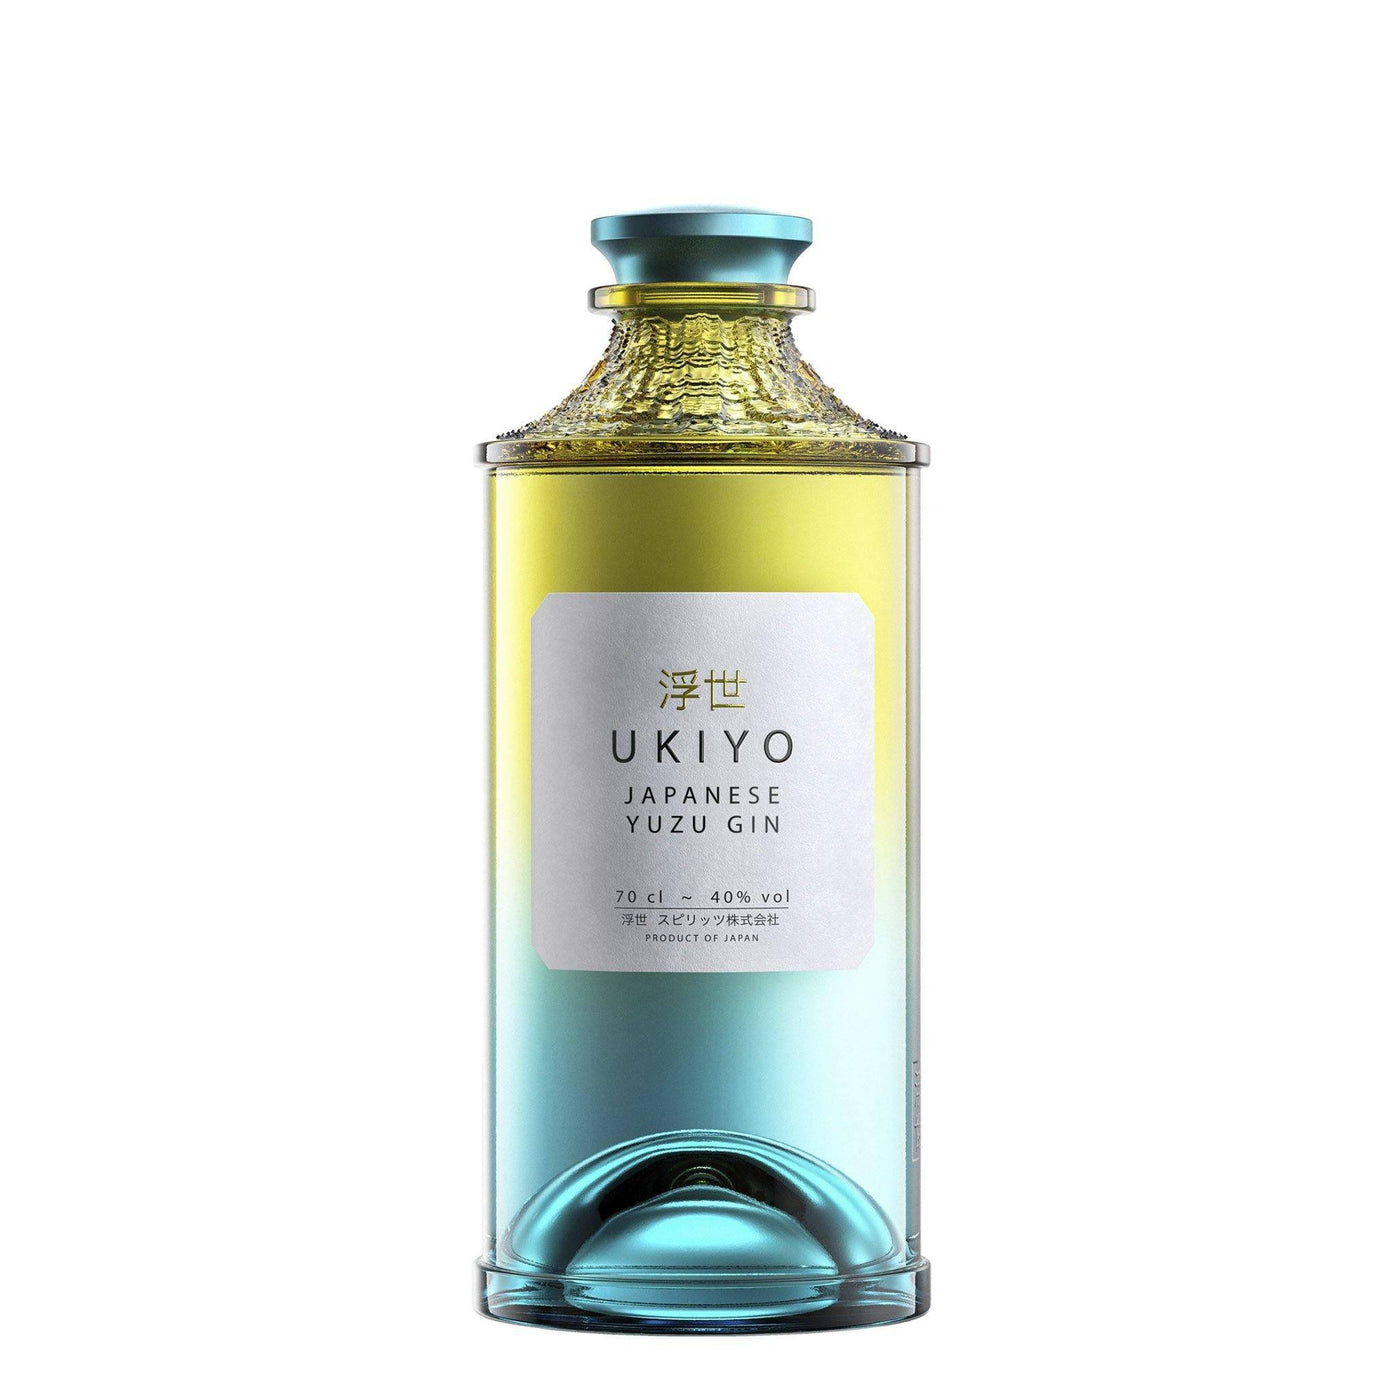 Ukiyo Yuzu Citrus Gin - Spiritly